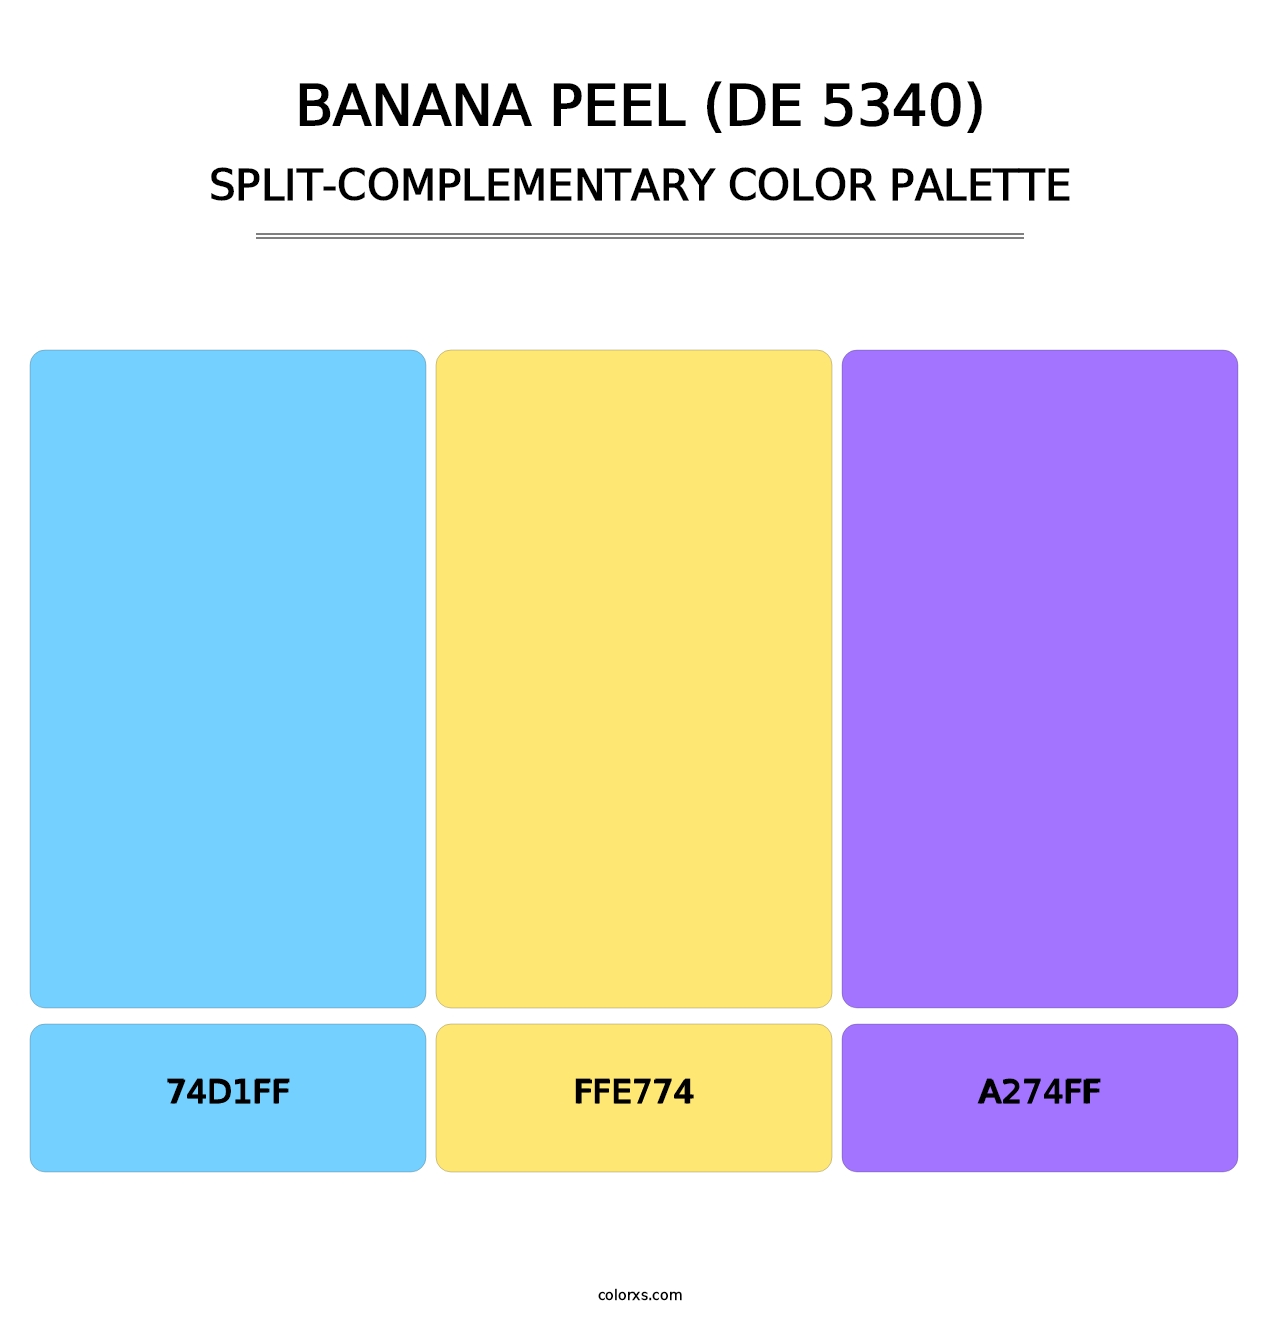 Banana Peel (DE 5340) - Split-Complementary Color Palette